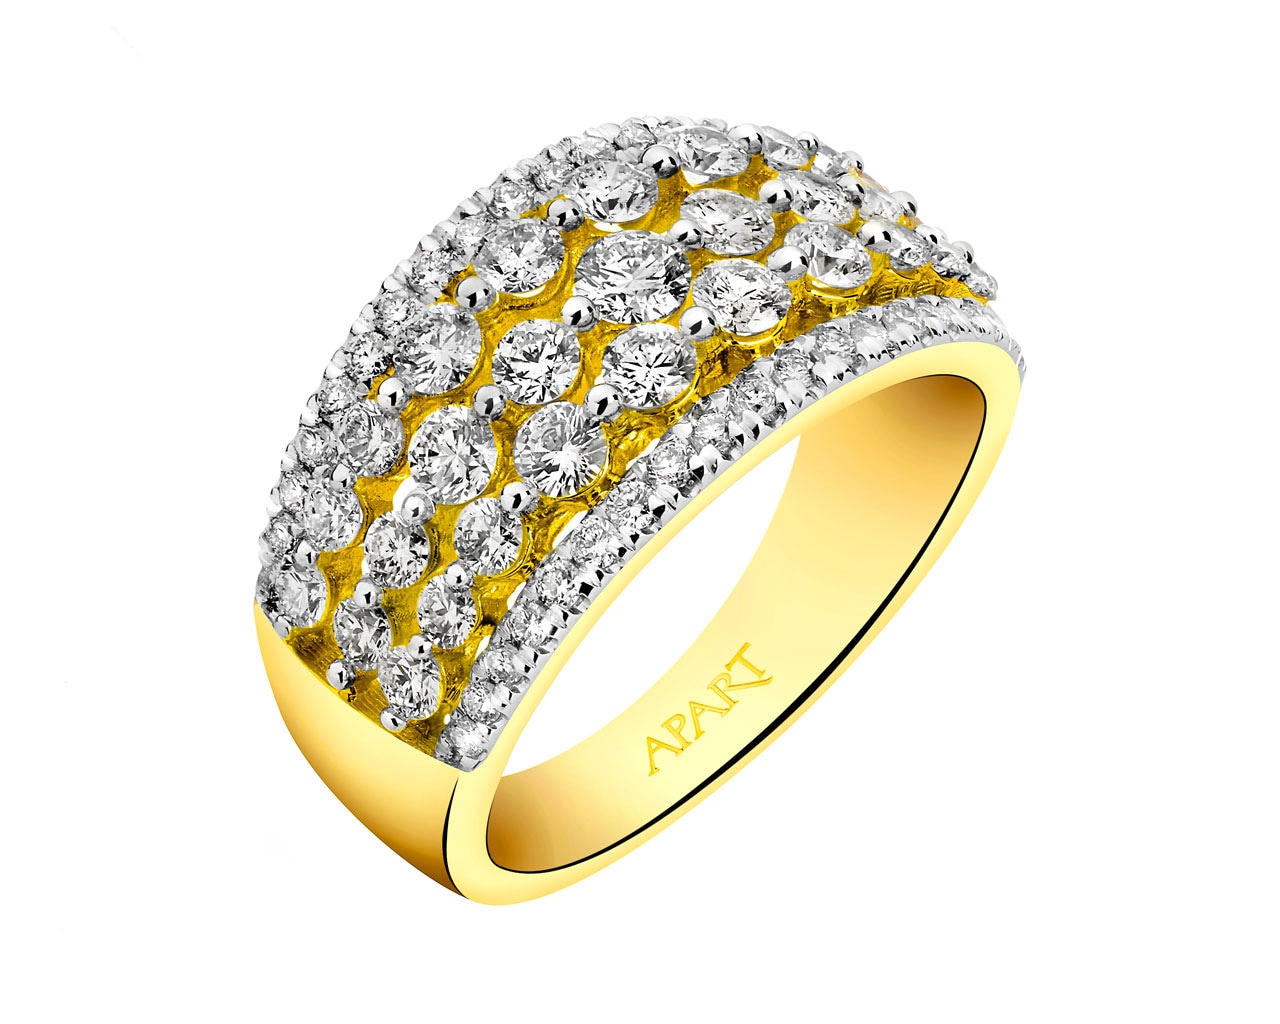 Prsten ze žlutého zlata s brilianty 1,50 ct - ryzost 585